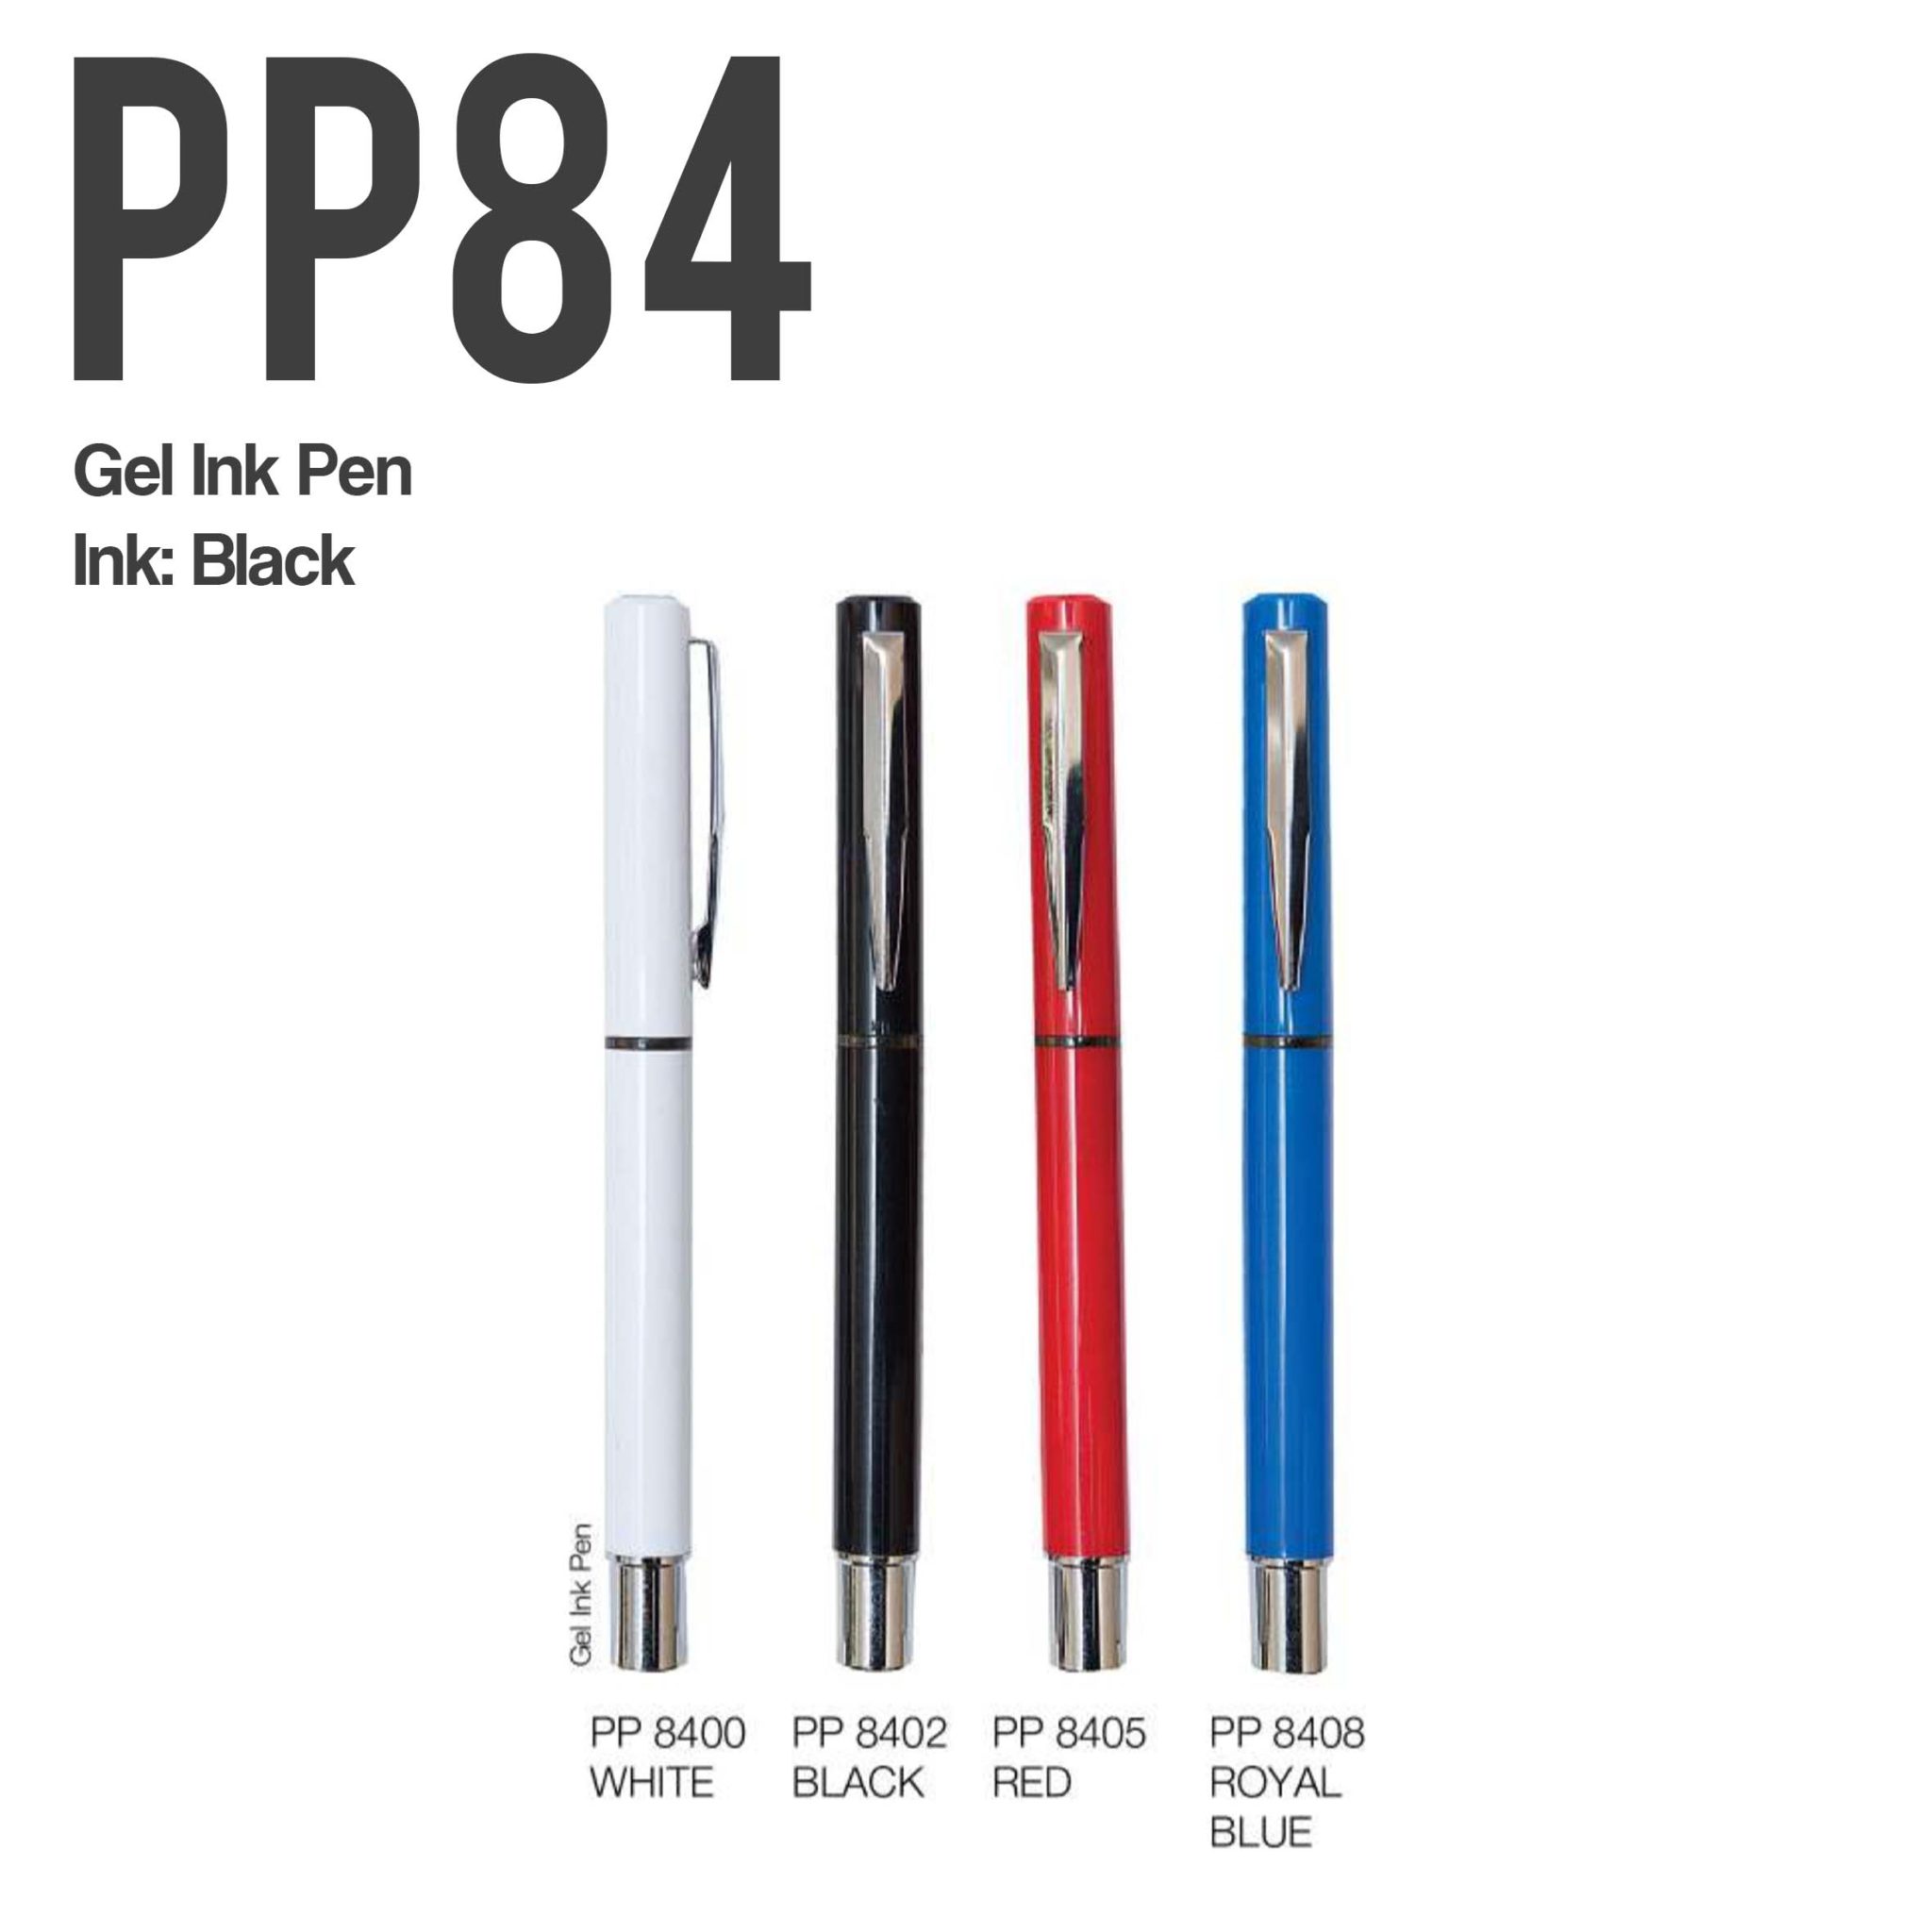 PP84 gel ink plastic pen scaled